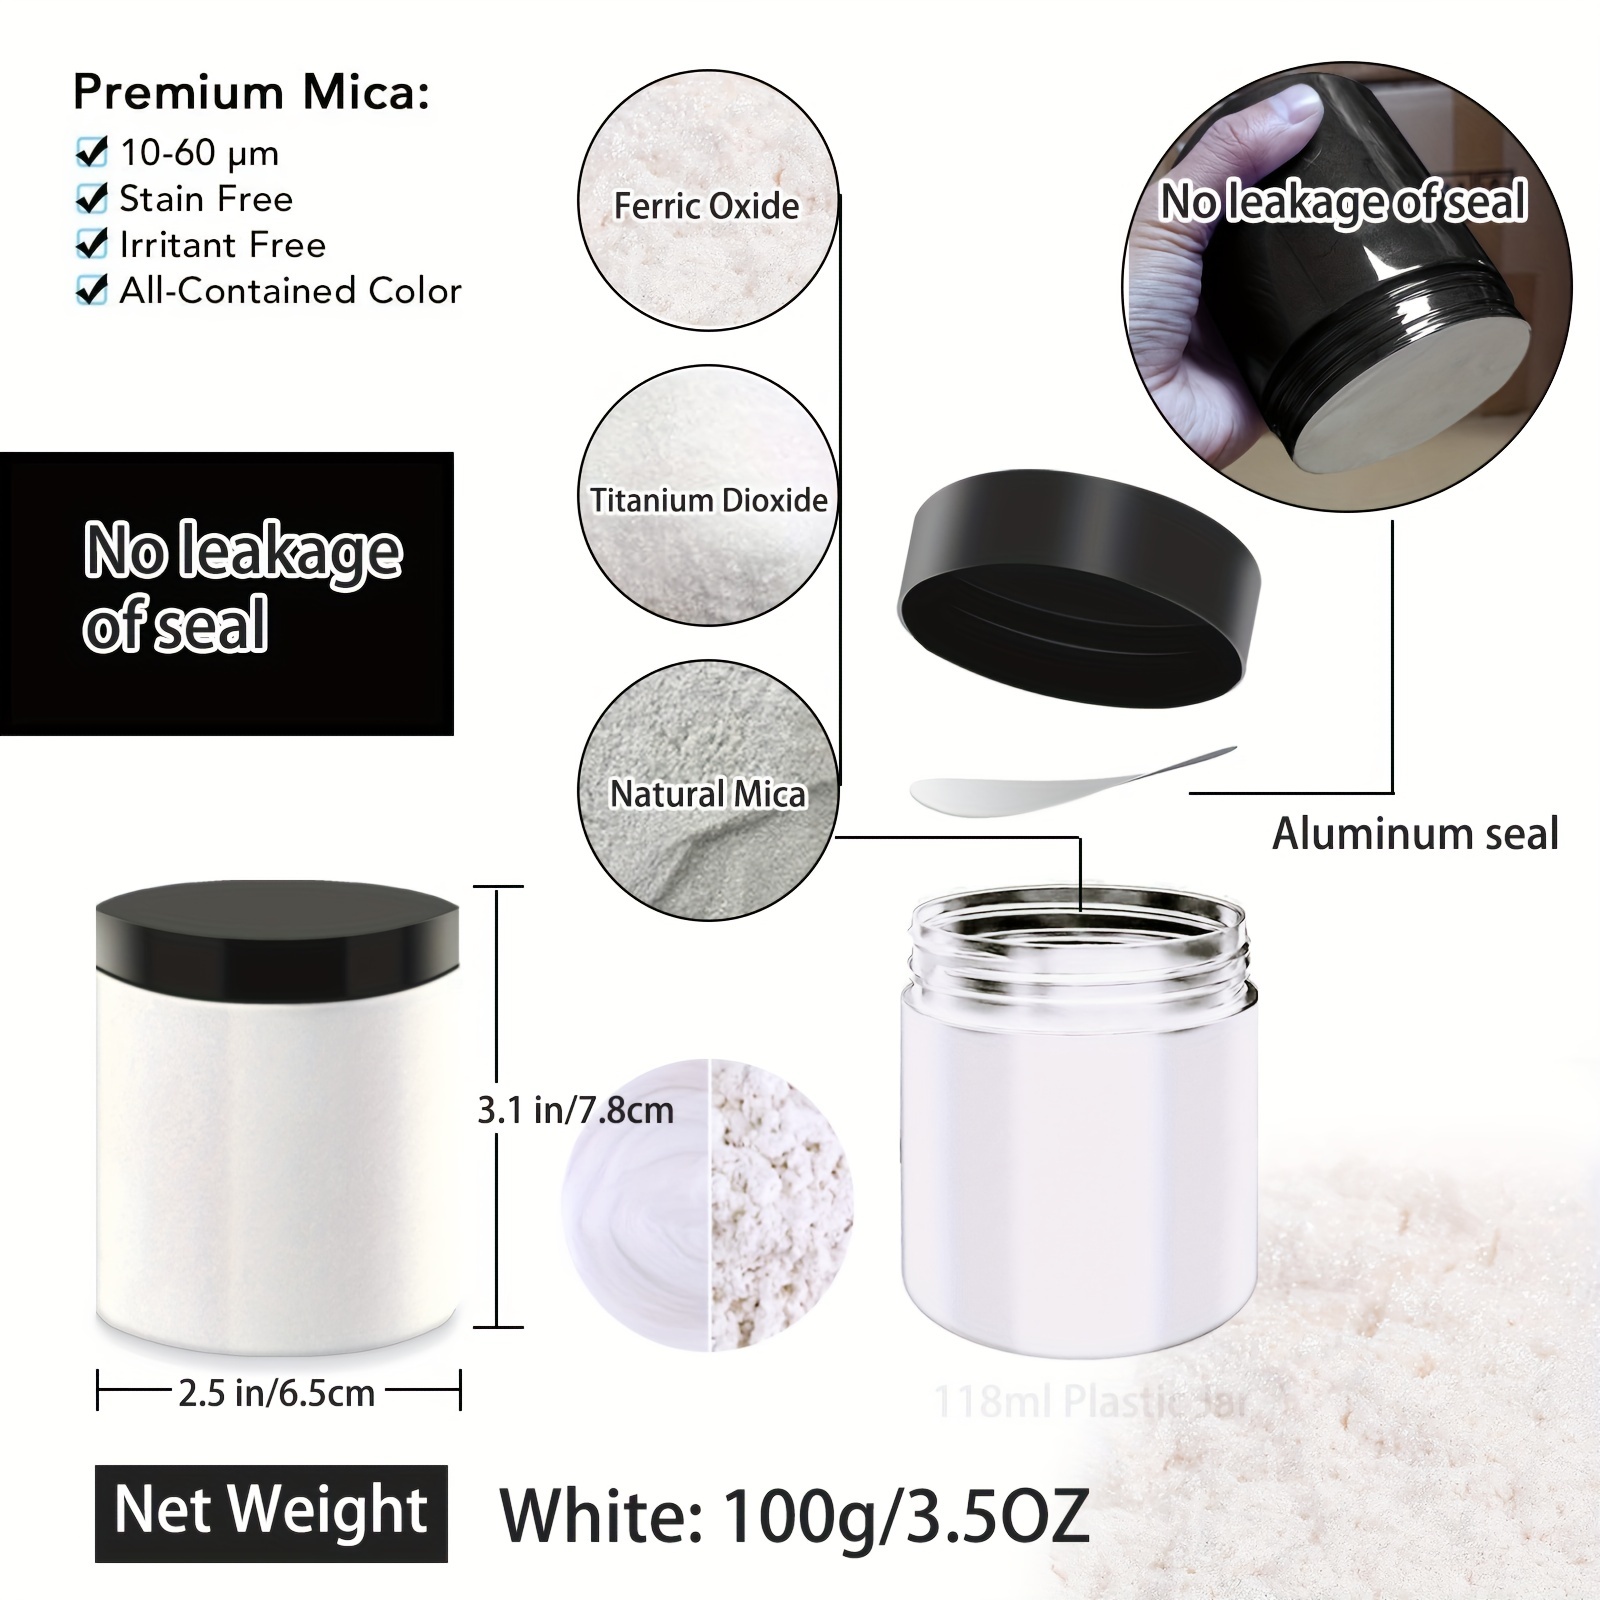  HTVRONT Mica Powder for Epoxy Resin - 1.76 oz/50g White Mica  Powder, Natural Mica Pigment Powder, Non-Toxic Mica Powder for Soap Making,  Resin, Candle Making, Bath Bomb, Slime Pigment